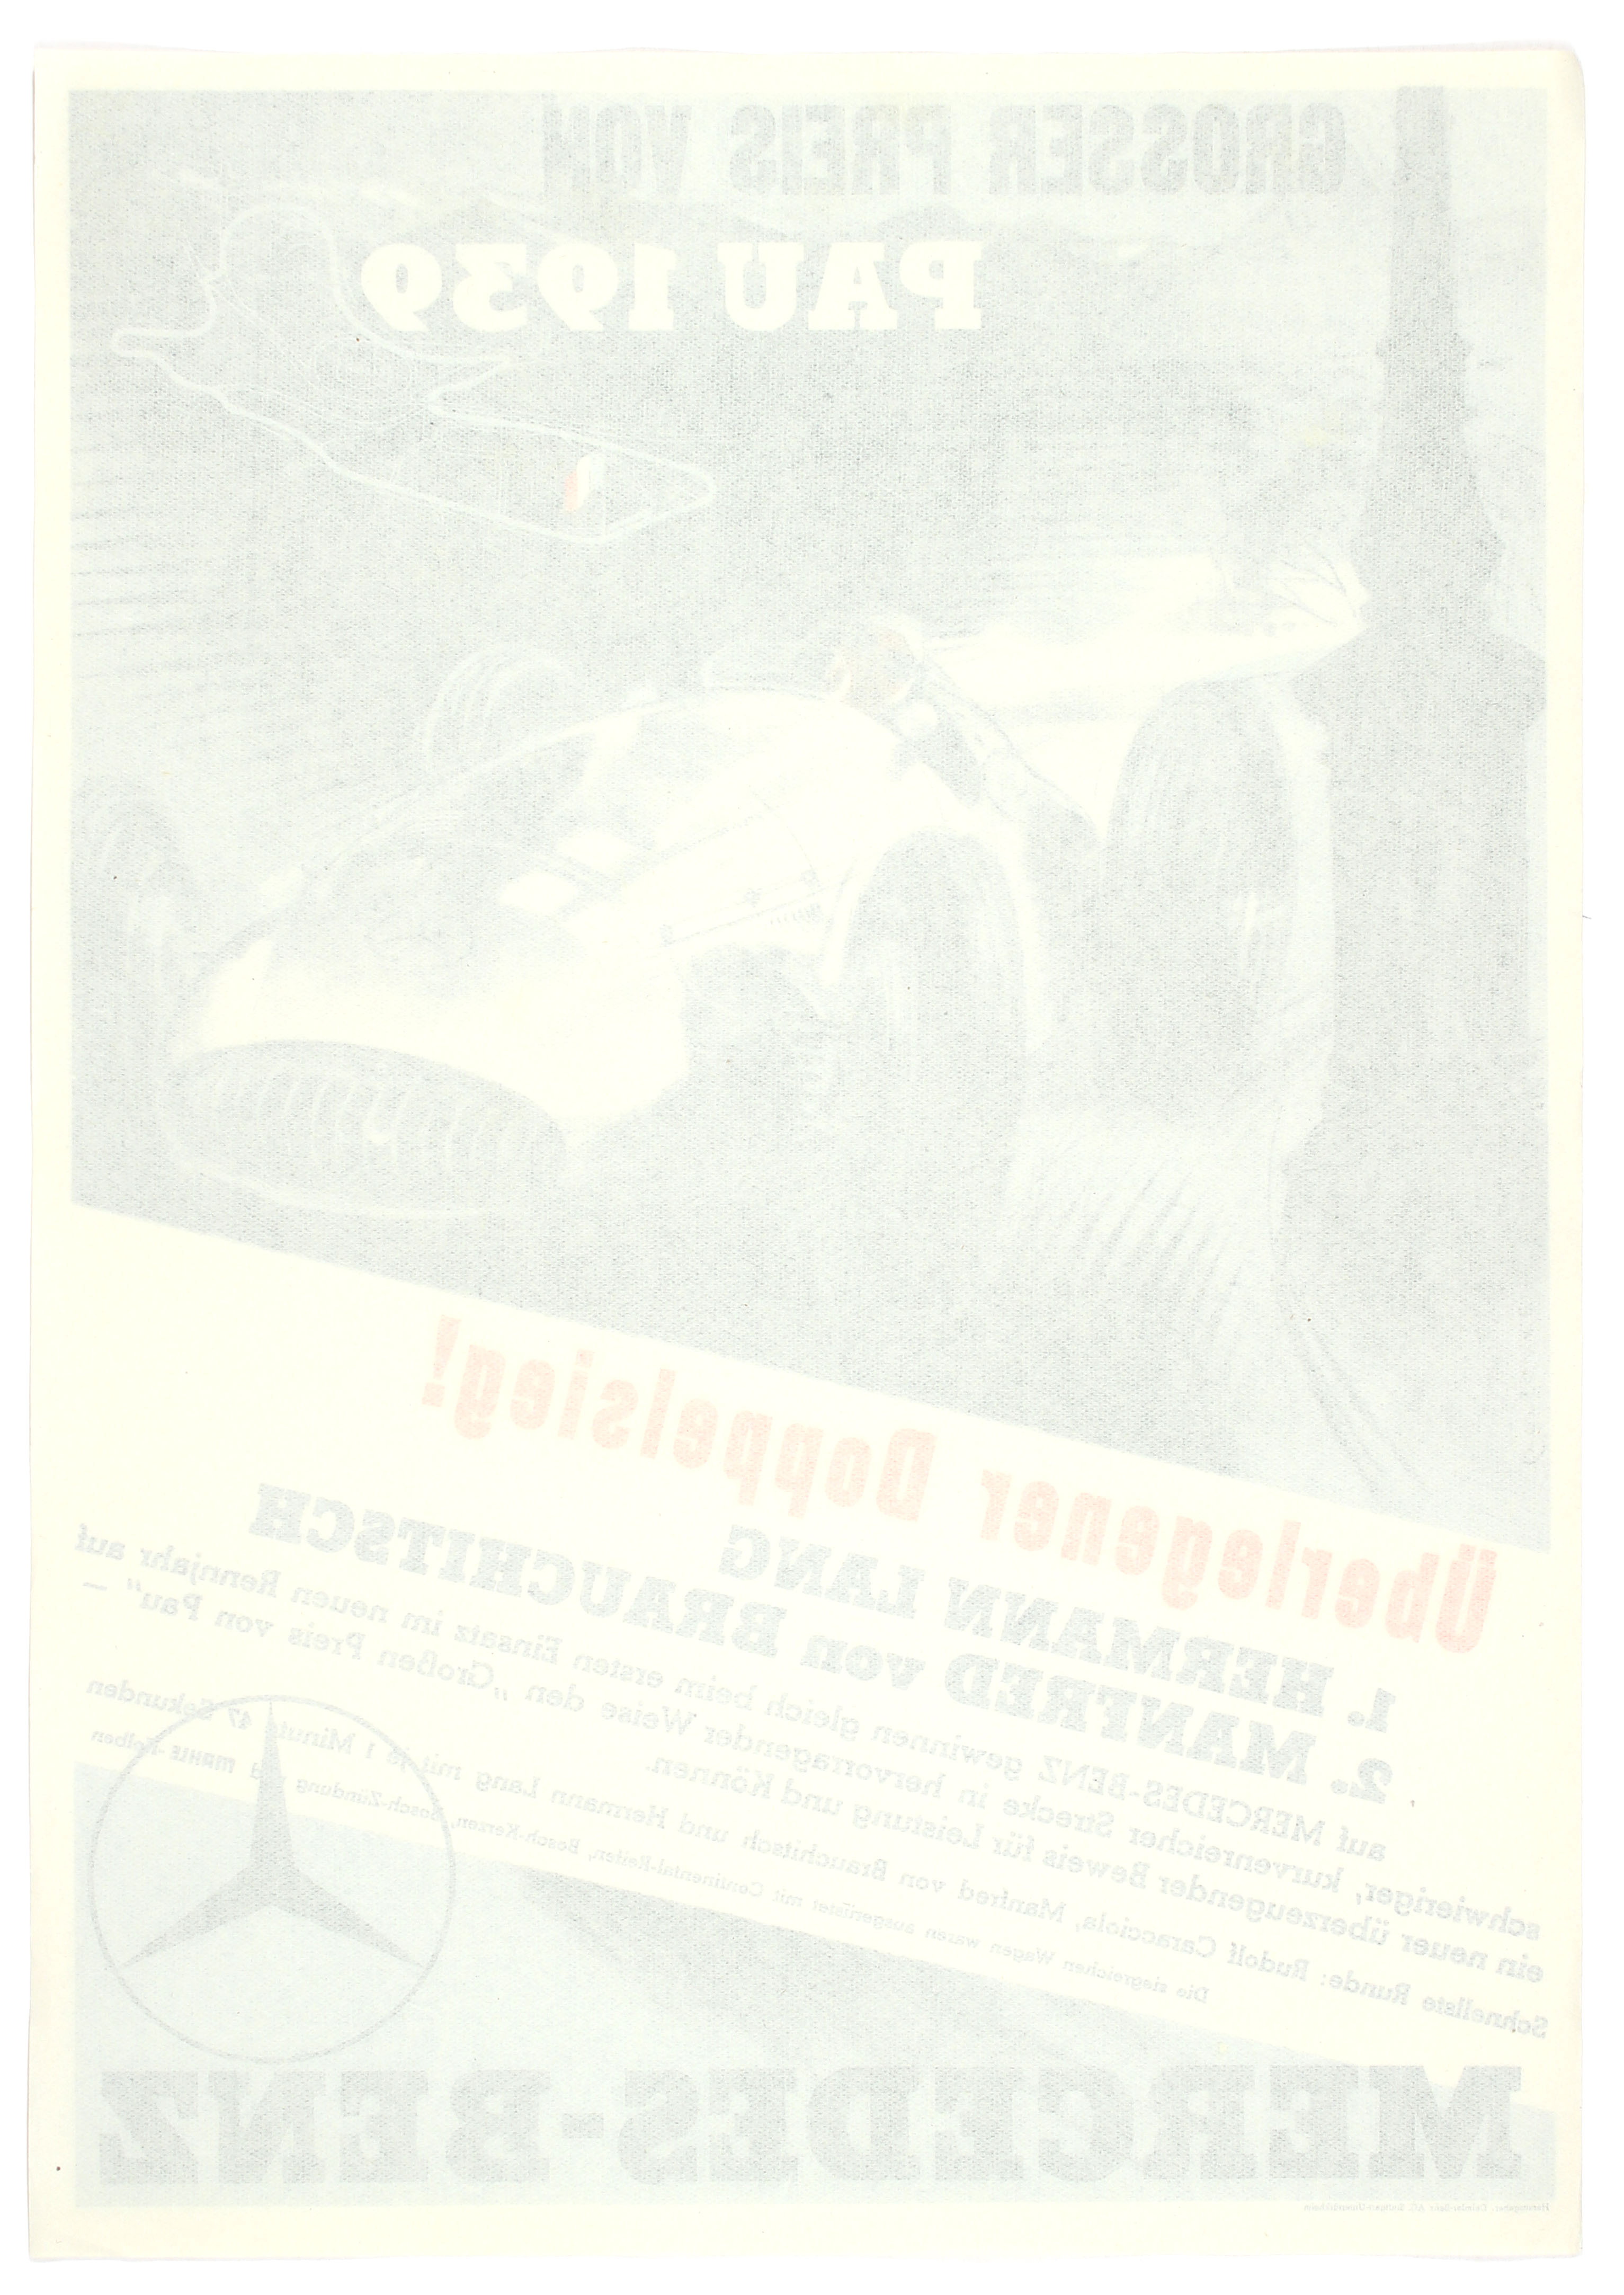 Car Racing Poster Grand Prix Pau 1939 Mercedes Benz motor racing poster - Image 2 of 2